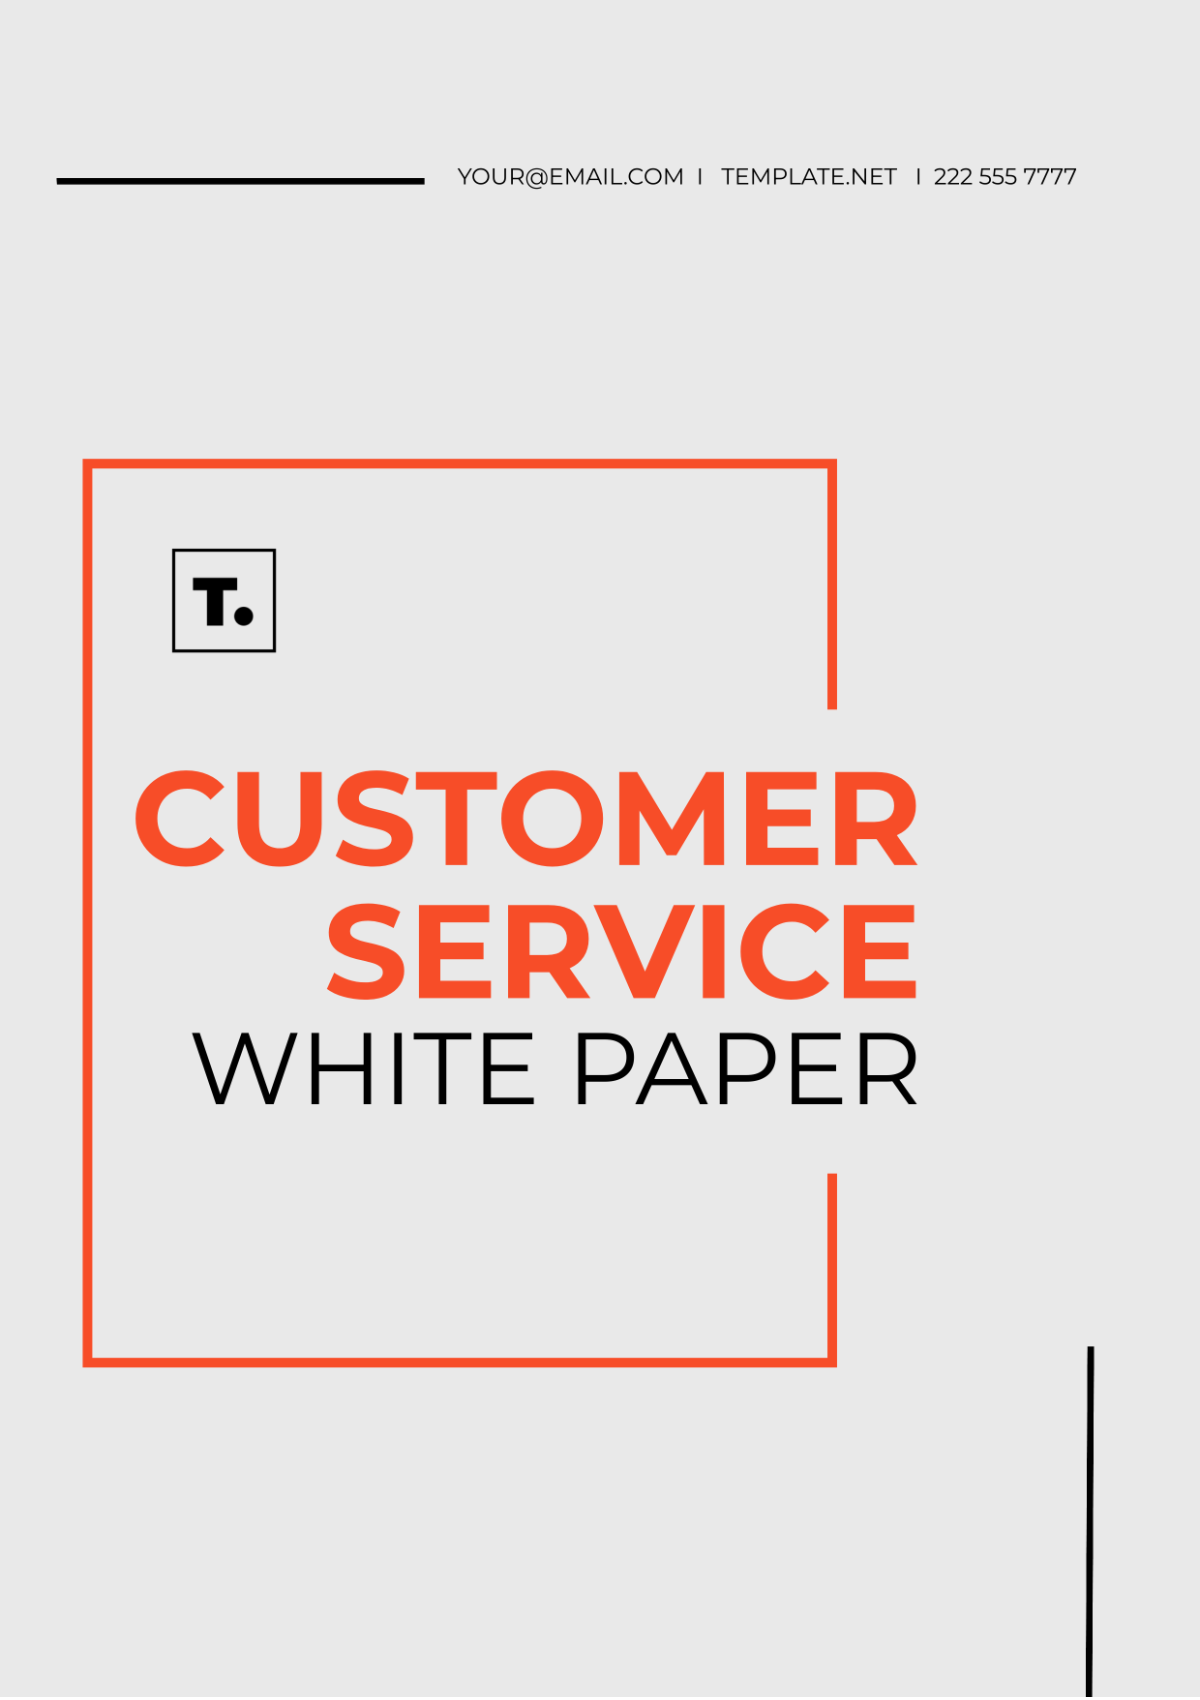 Customer Service White Paper Template